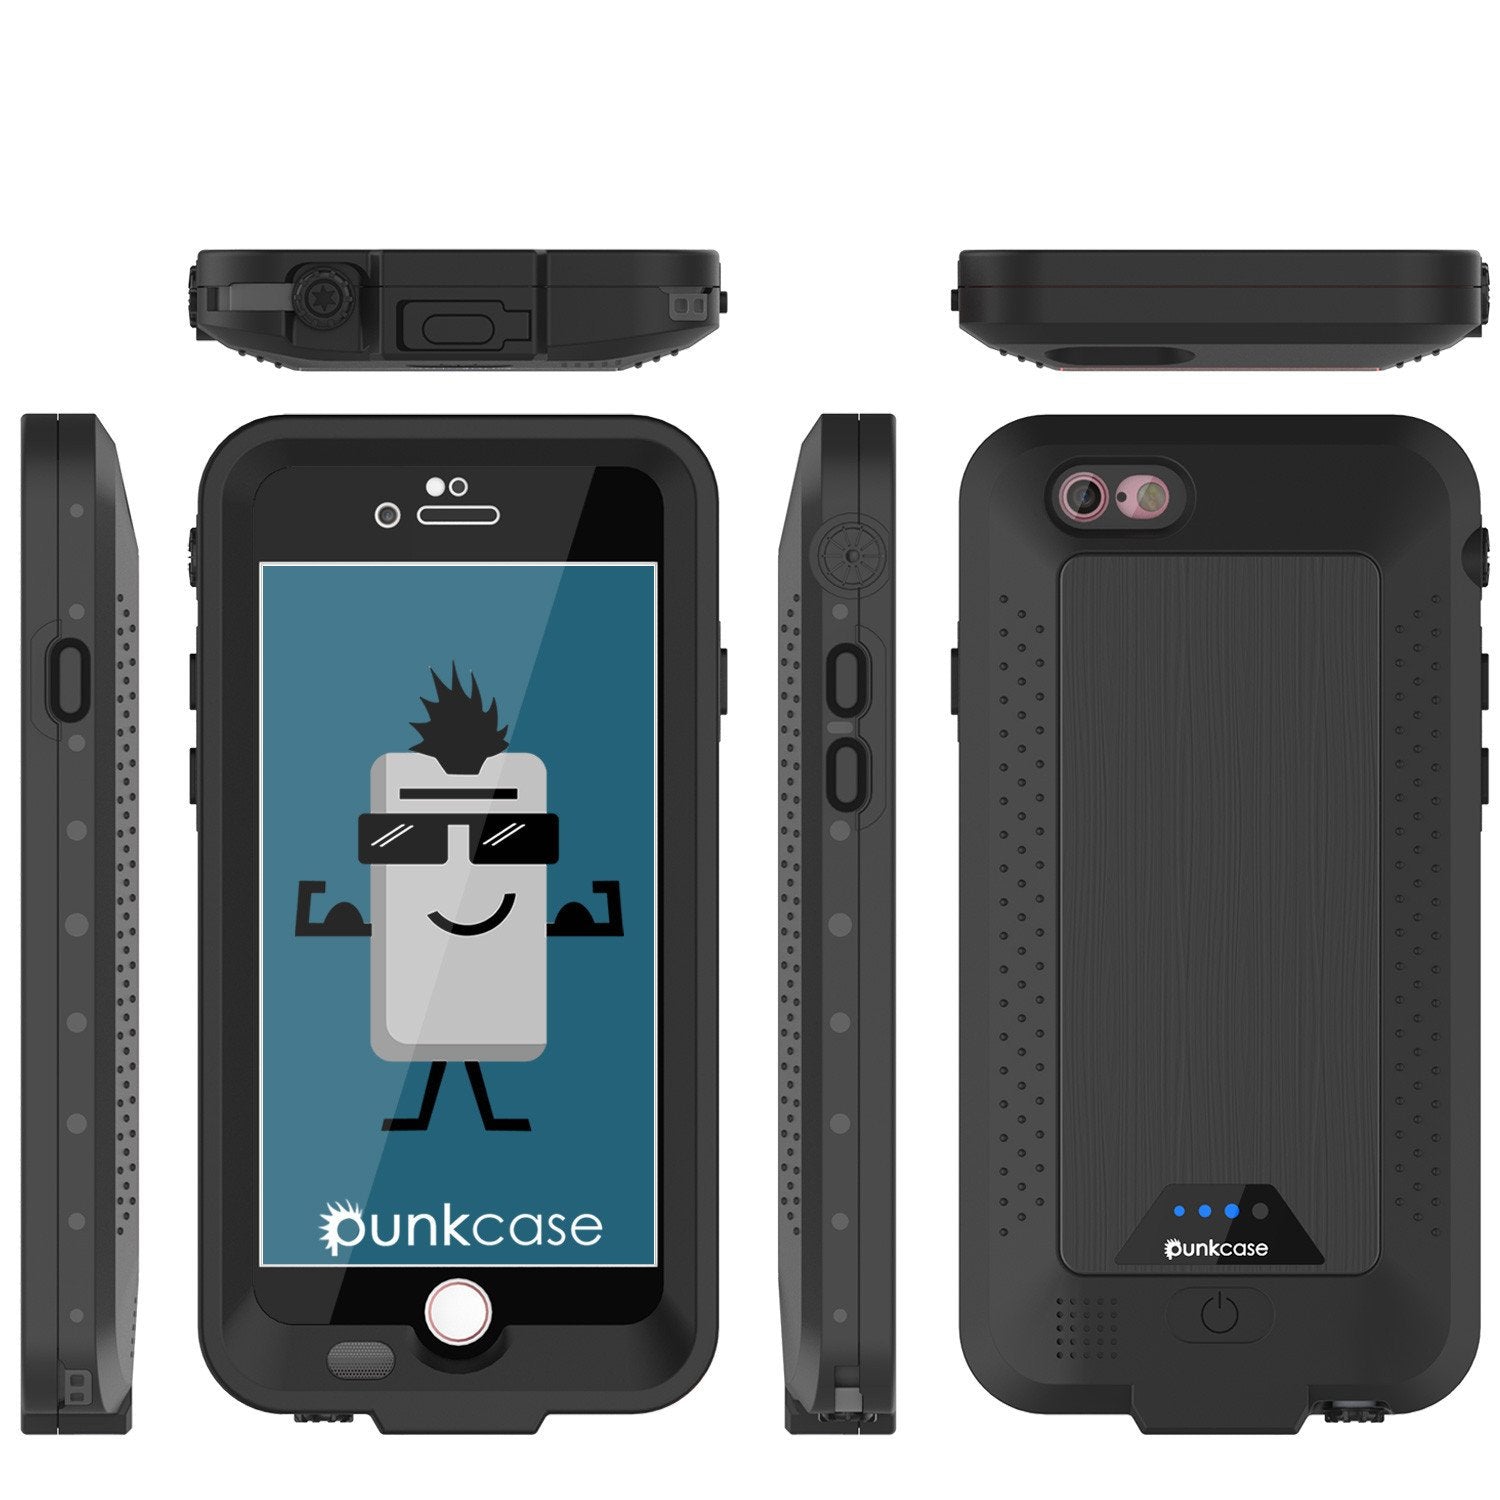 PunkJuice iPhone 6+ Plus/6s+ Plus Battery Case Black - Waterproof Slim Power Juice Bank with 4300mAh